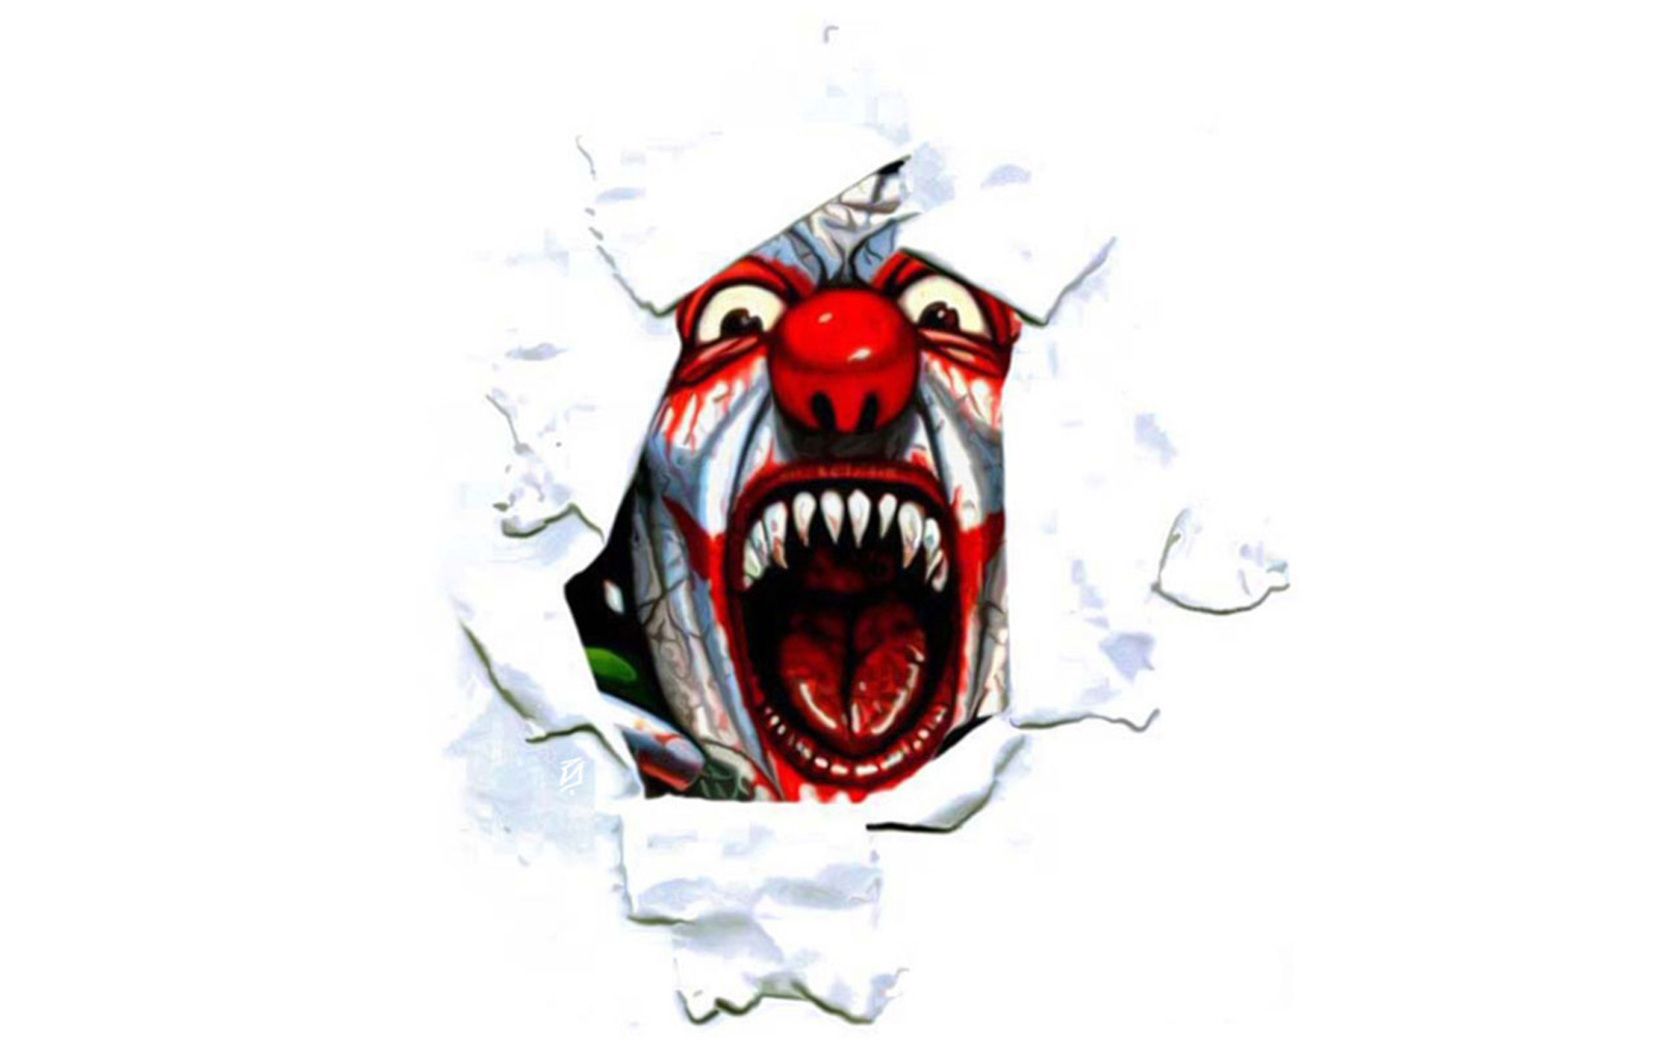 Description Evil Clown Wallpaper Background In HD